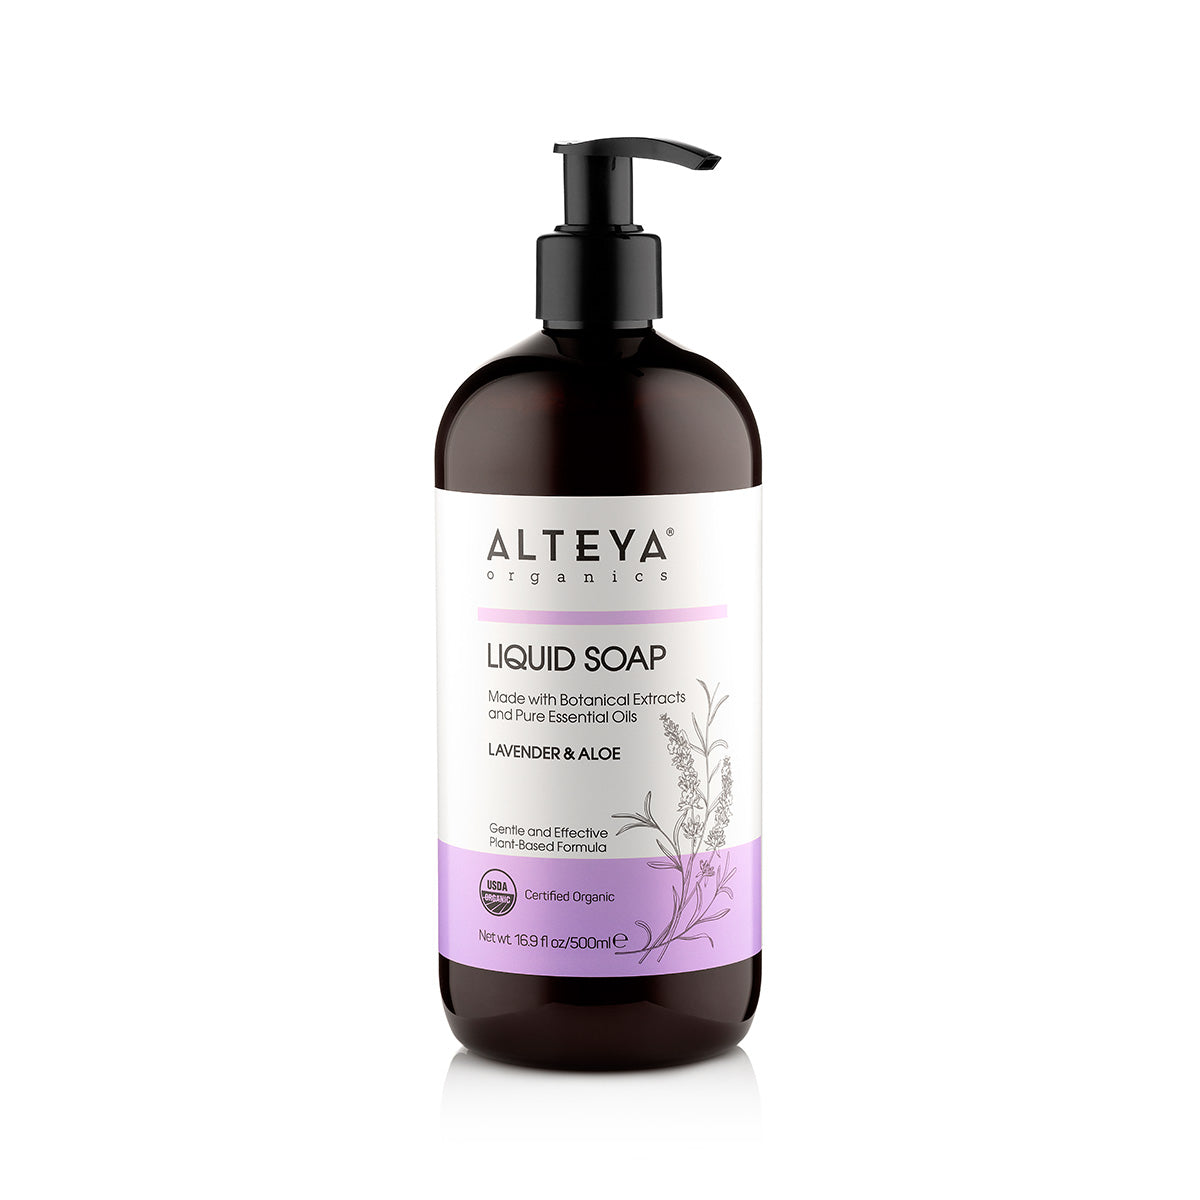 A bottle of Alteya Organics Liquid Soap Lavender & Aloe on a white background.